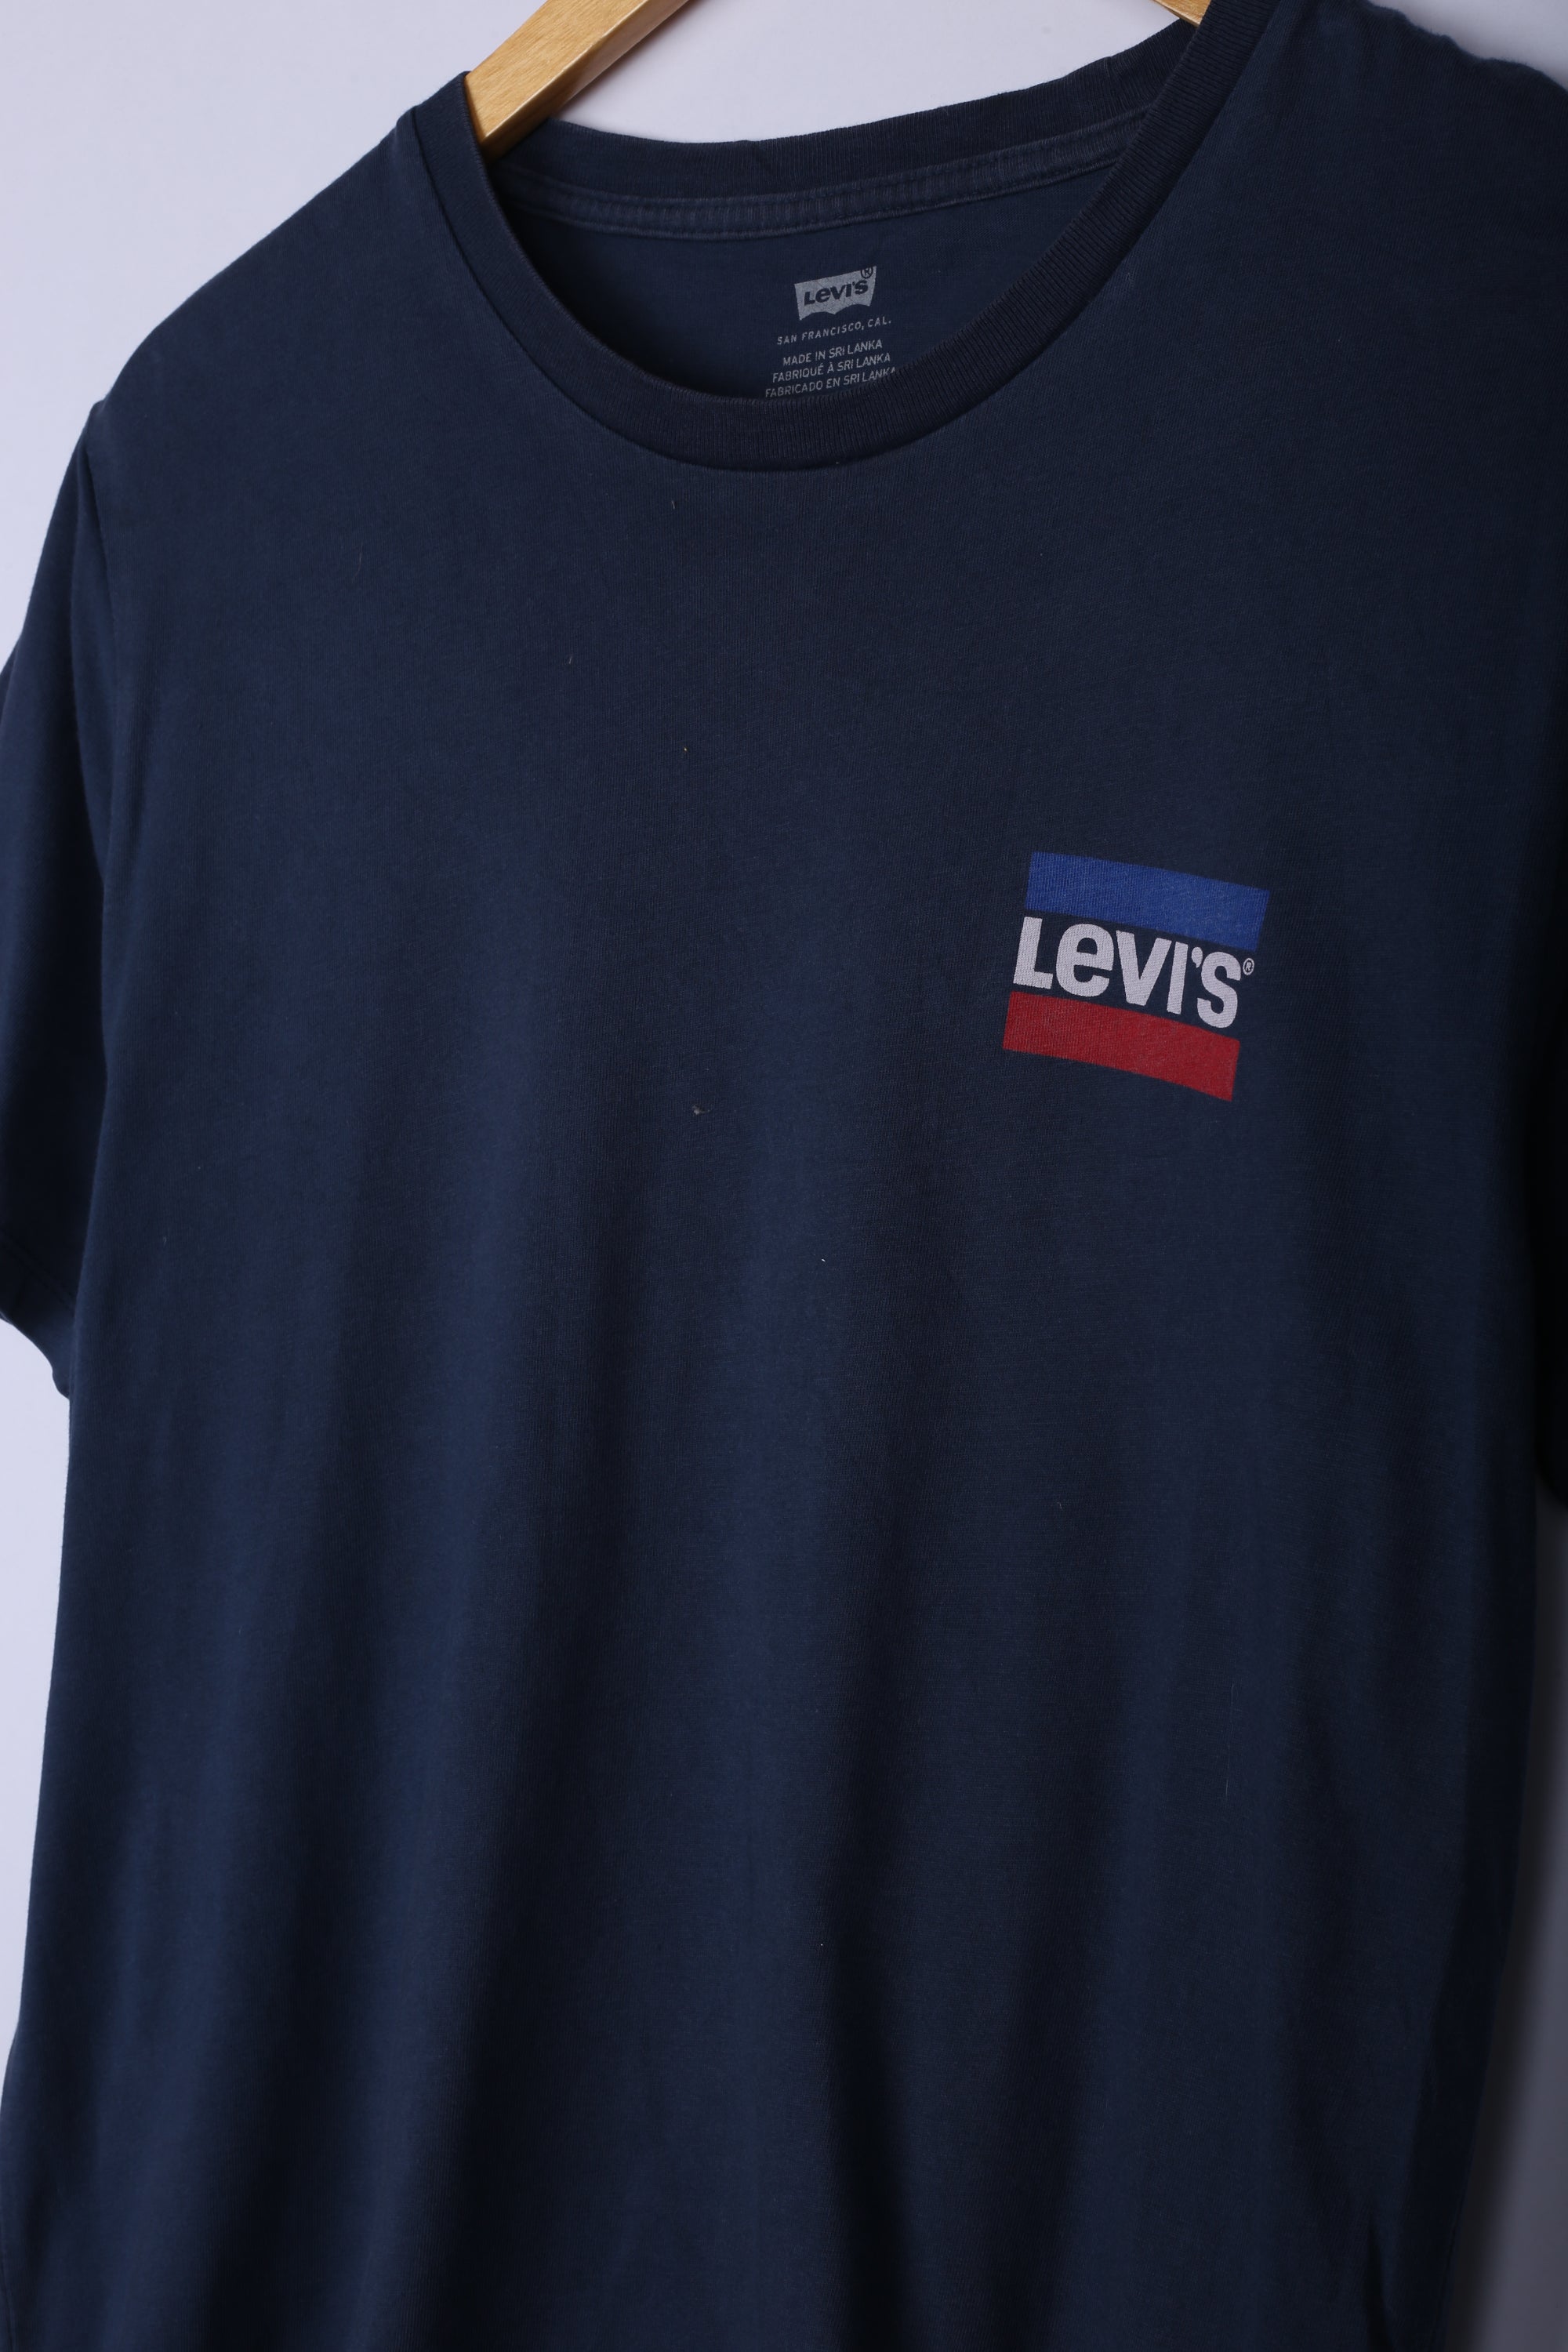 Vintage 90's Levis Tee Navy